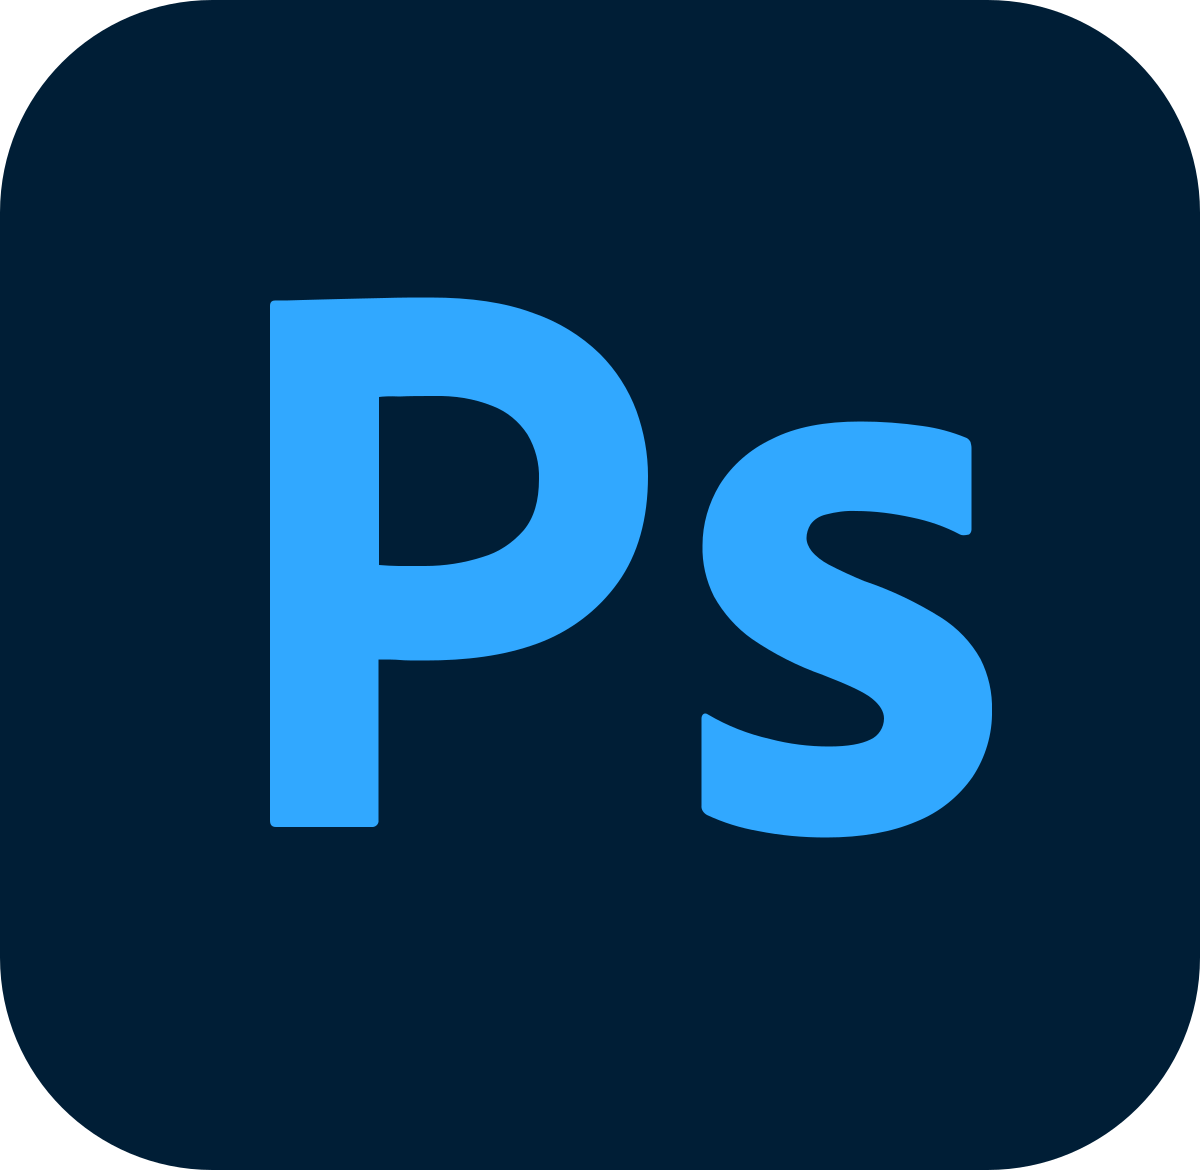 Adobe Photoshop - Wikipedia